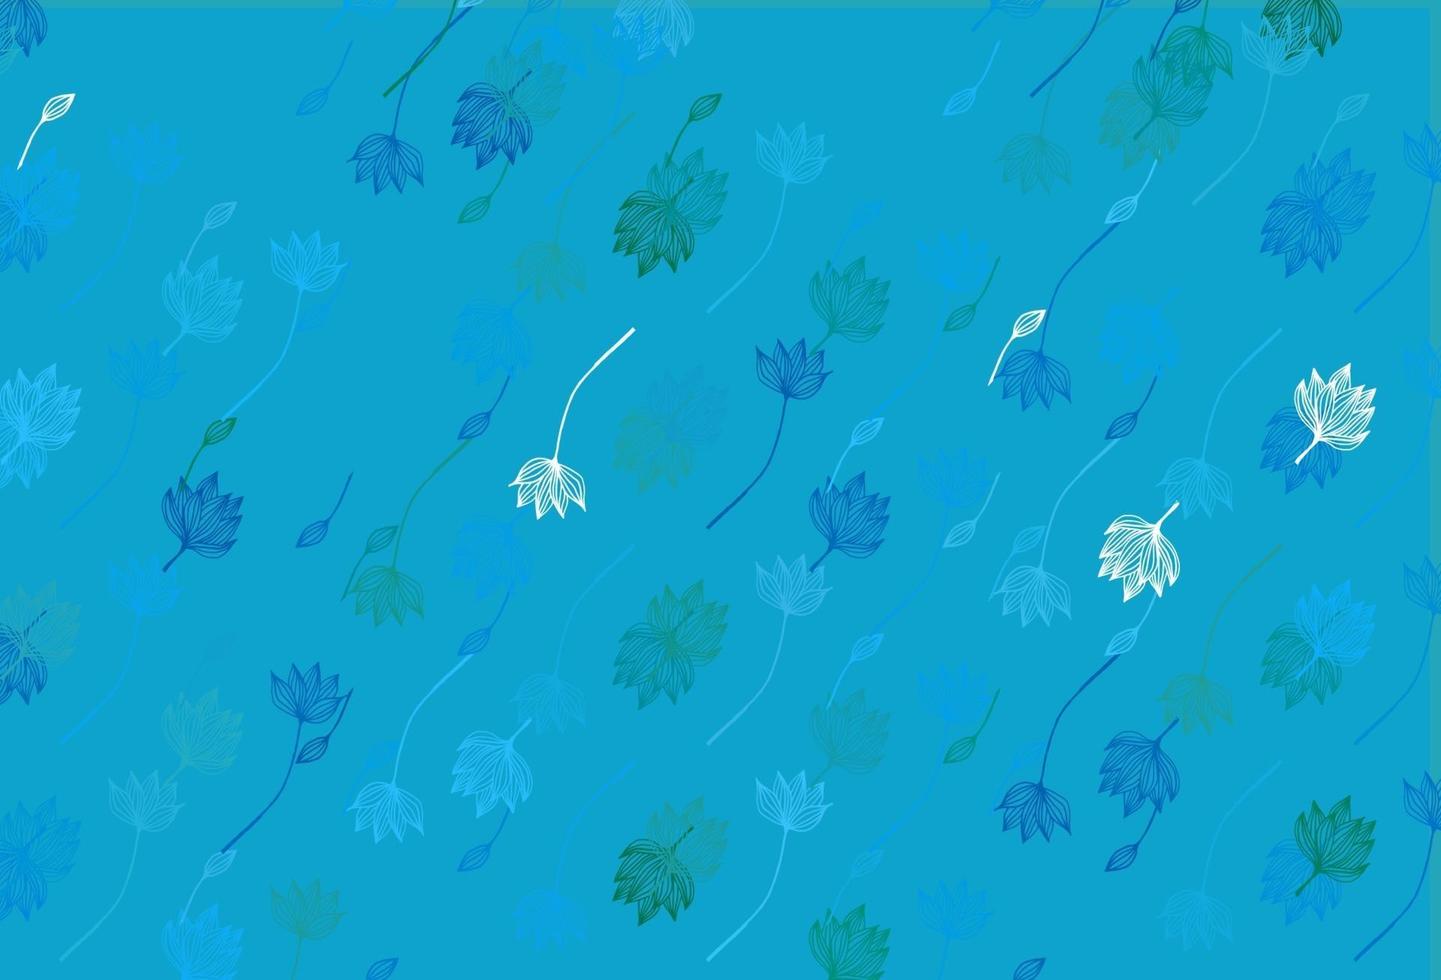 layout de doodle de vetor azul e verde claro.